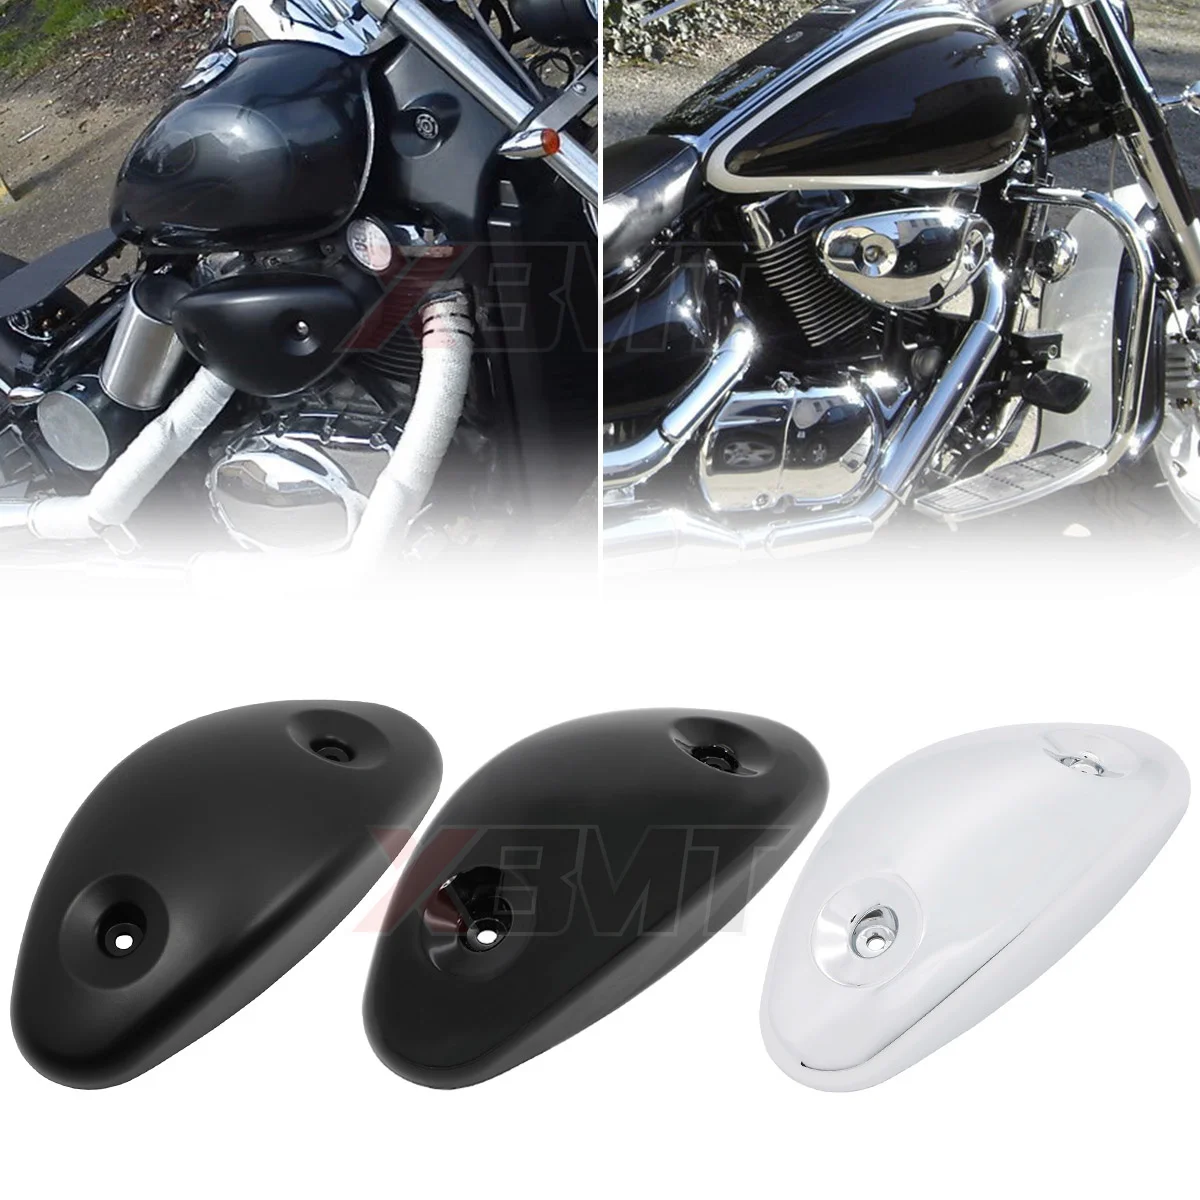 

Motorcycle Air Cleaner Intake Case Cover Air Filter Cap For Suzuki Boulevard / Intruder VL800 C50 2001-2008